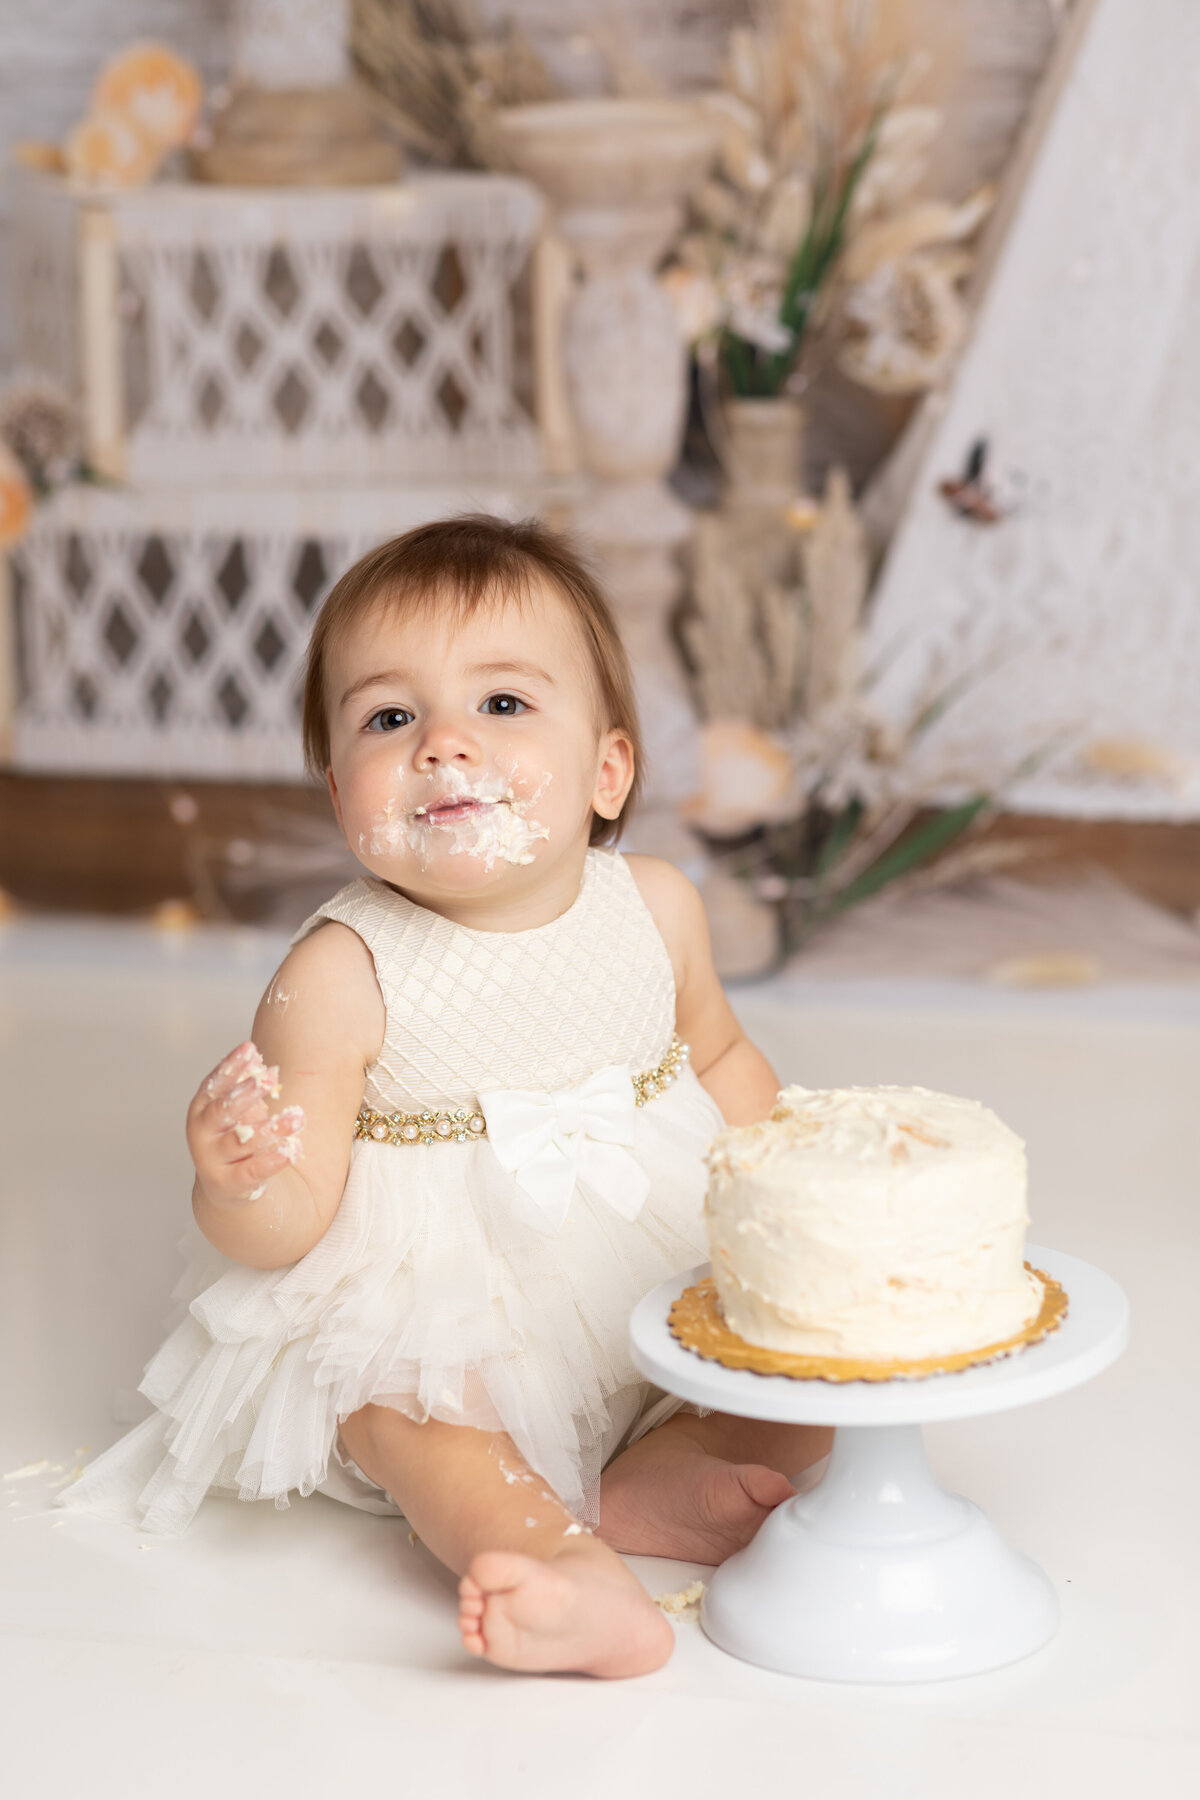 boho theme cake smash for girl's first birthday